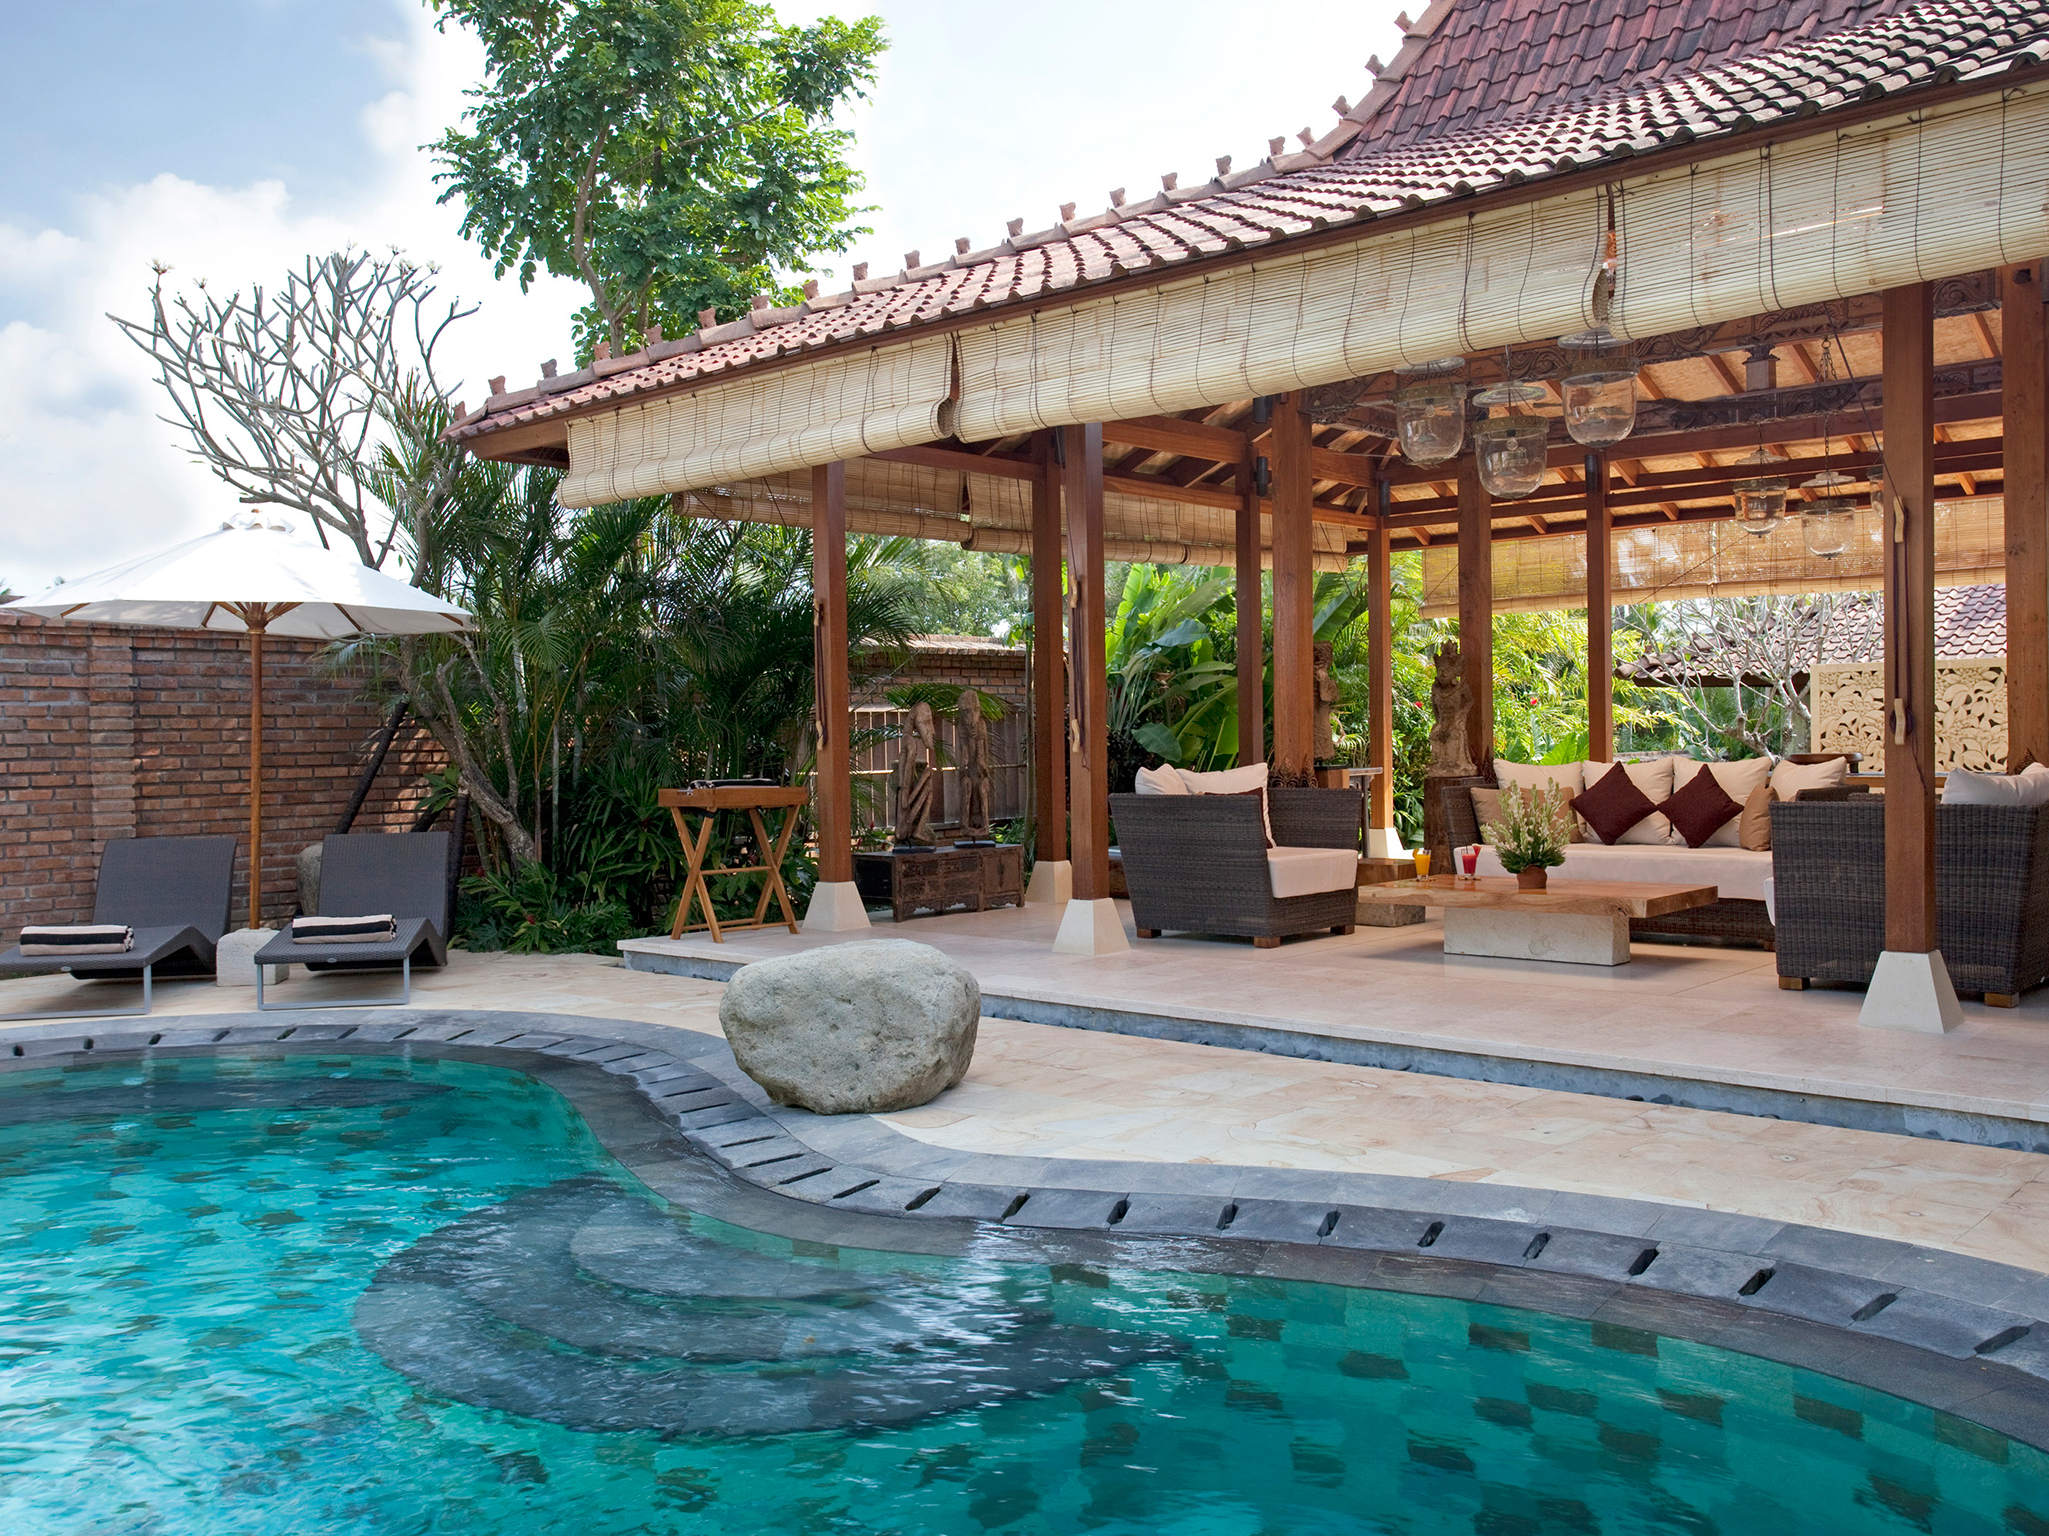 2. Villa Amy - Pool and living pavillion - Dea Villas - Villa Amy, Canggu, Bali